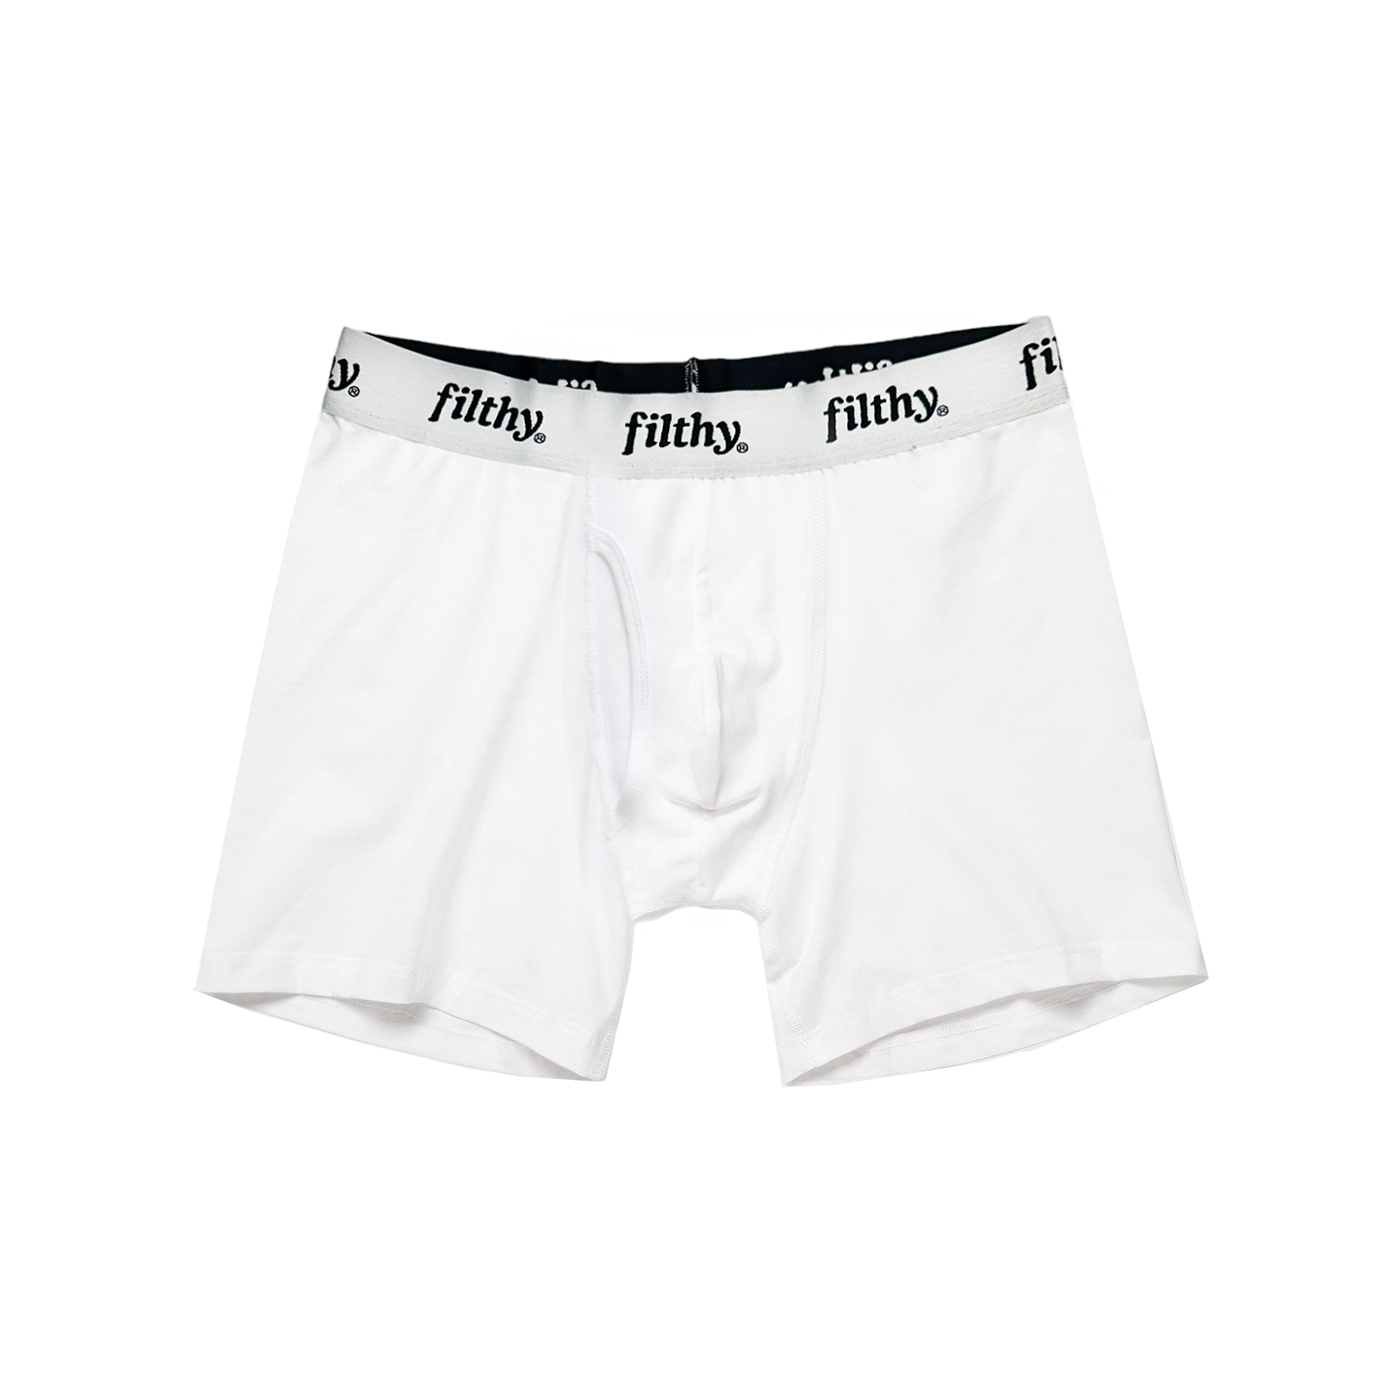 Greta Van Fleet Boxers Custom Photo Boxers Men's Underwear Heart Boxers  White